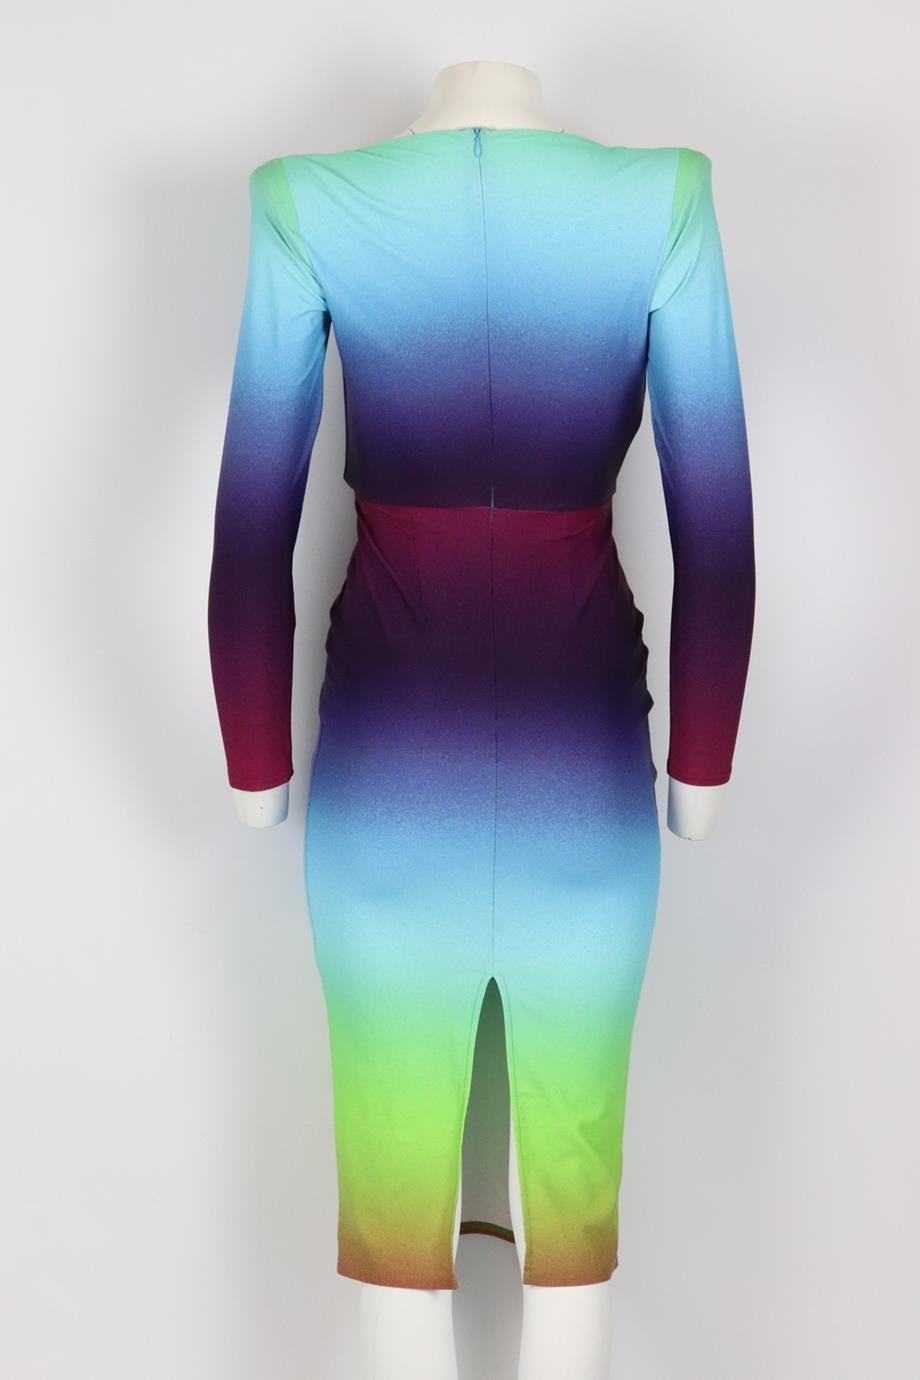 alex perry rainbow dress